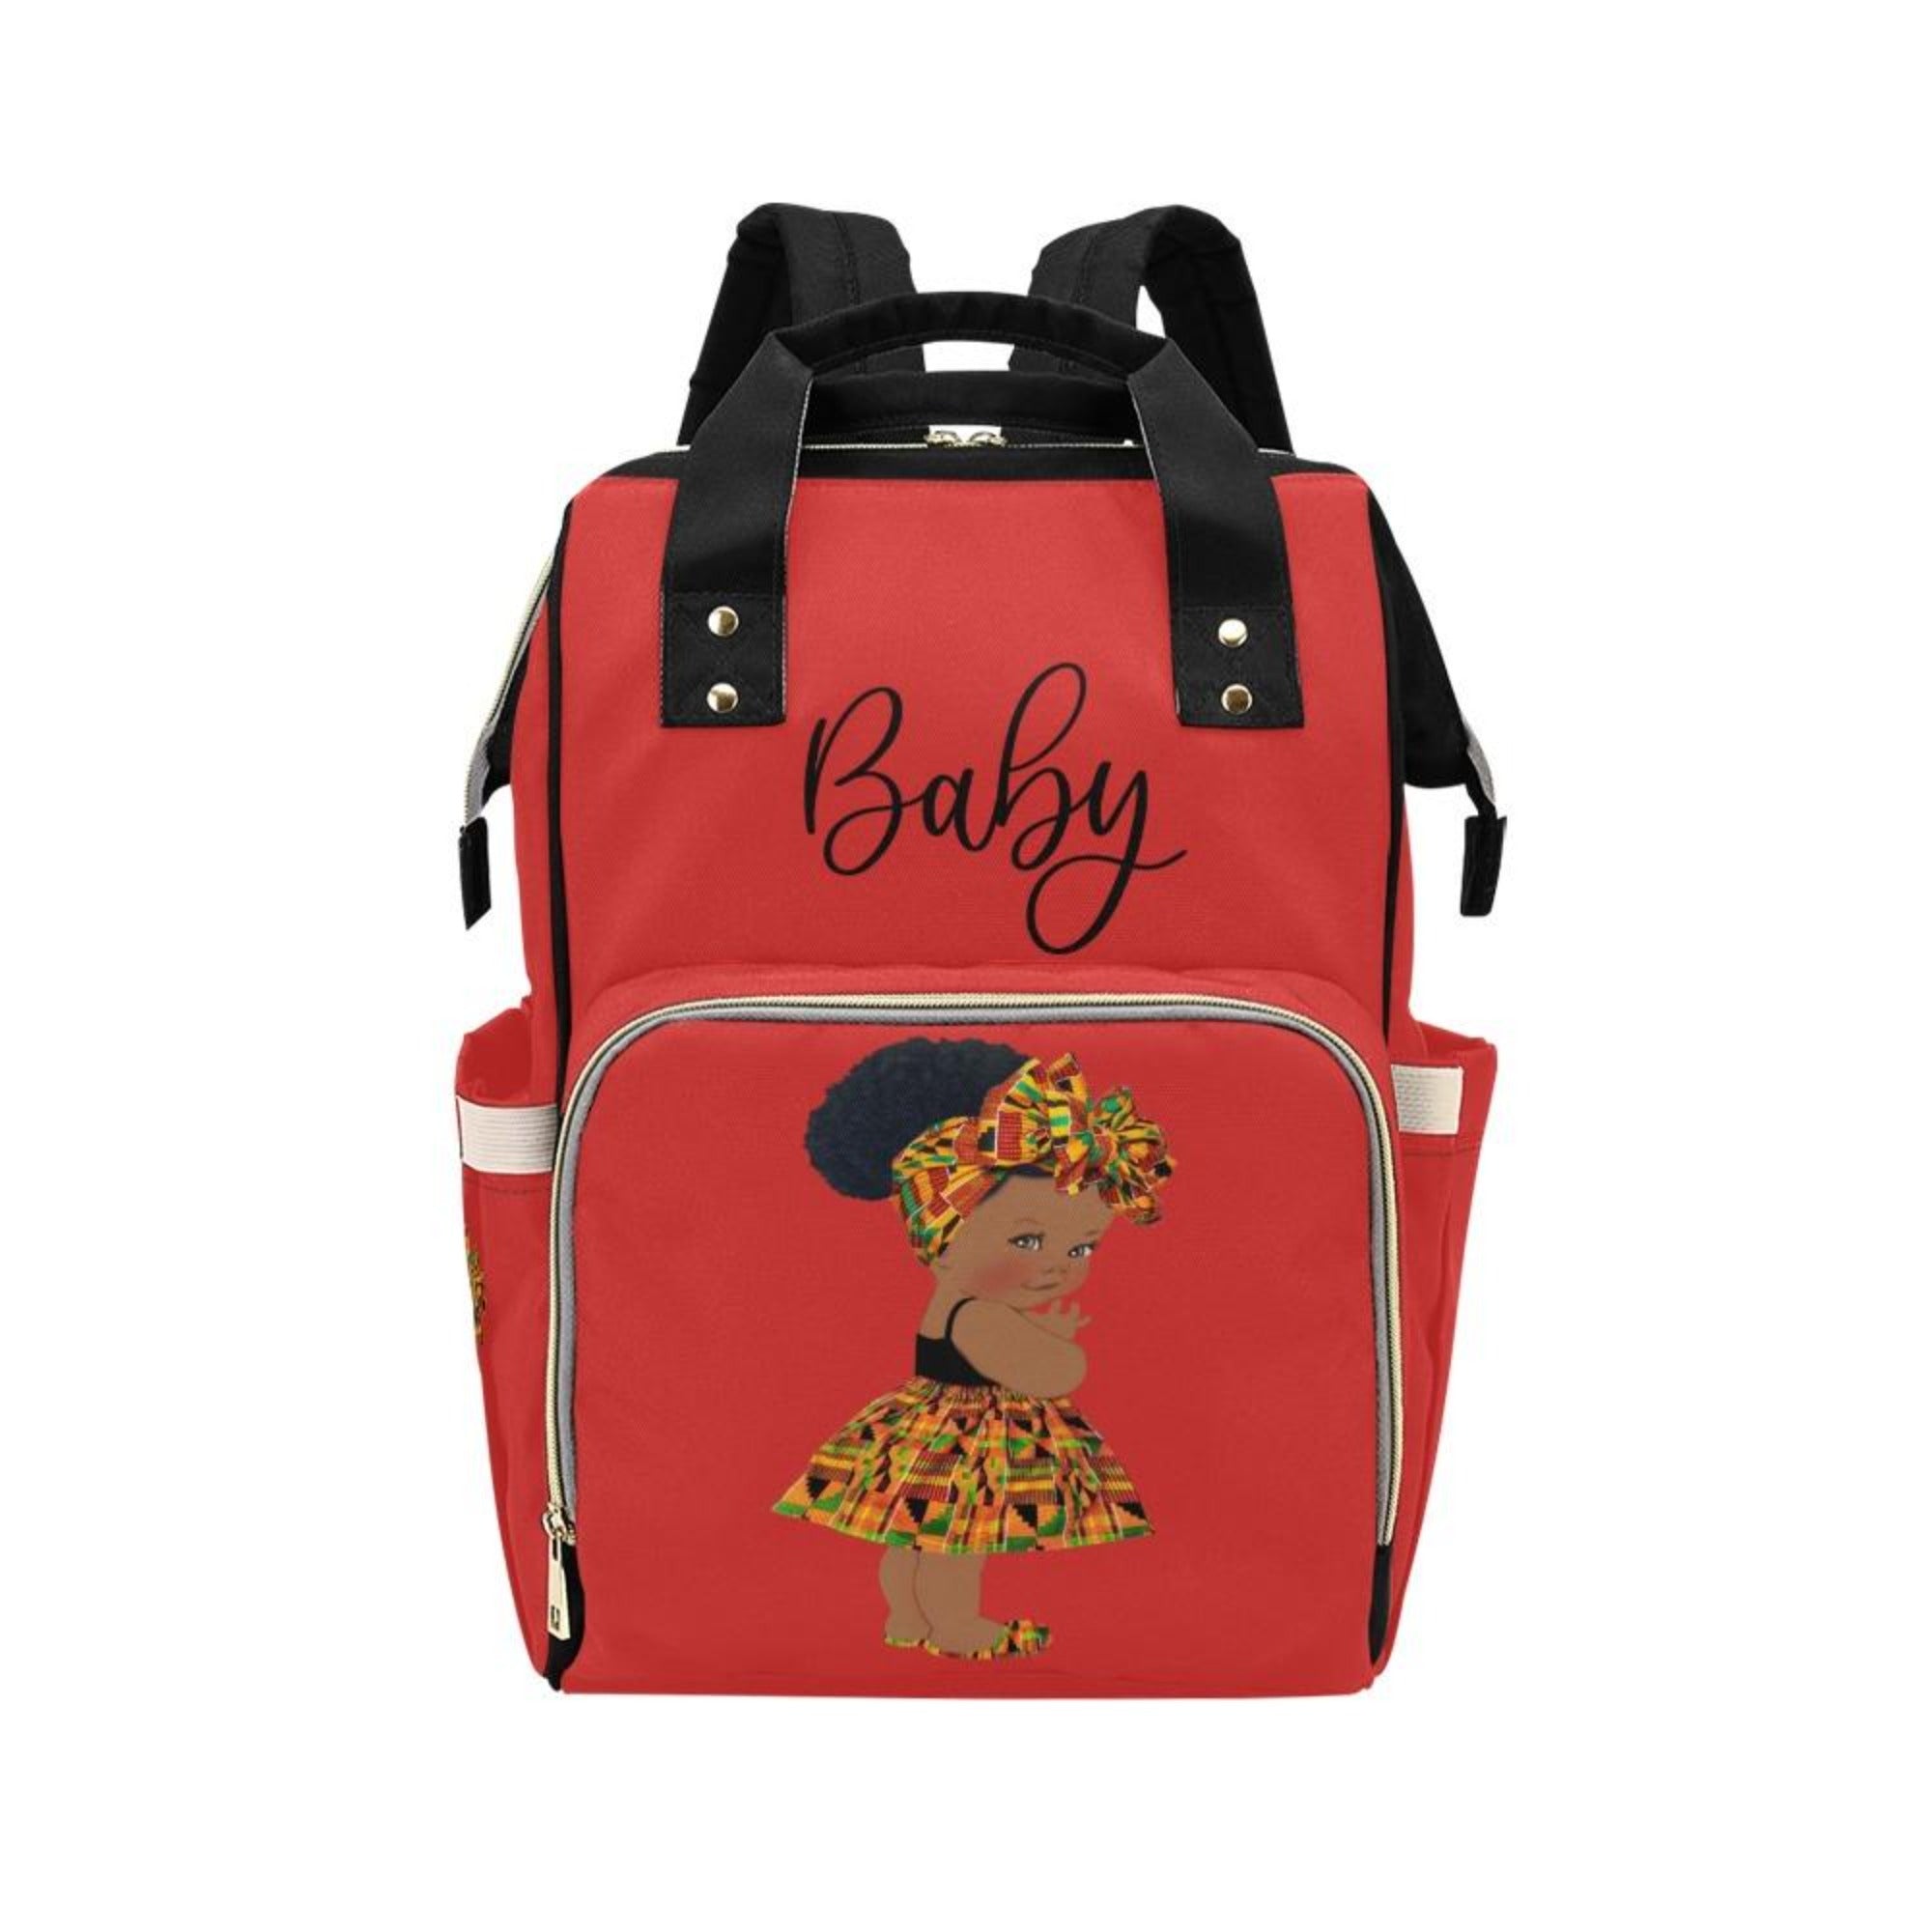 Designer Diaper Bag - Ethnic African American Baby Girl - Dark Red Multi-Function Backpack